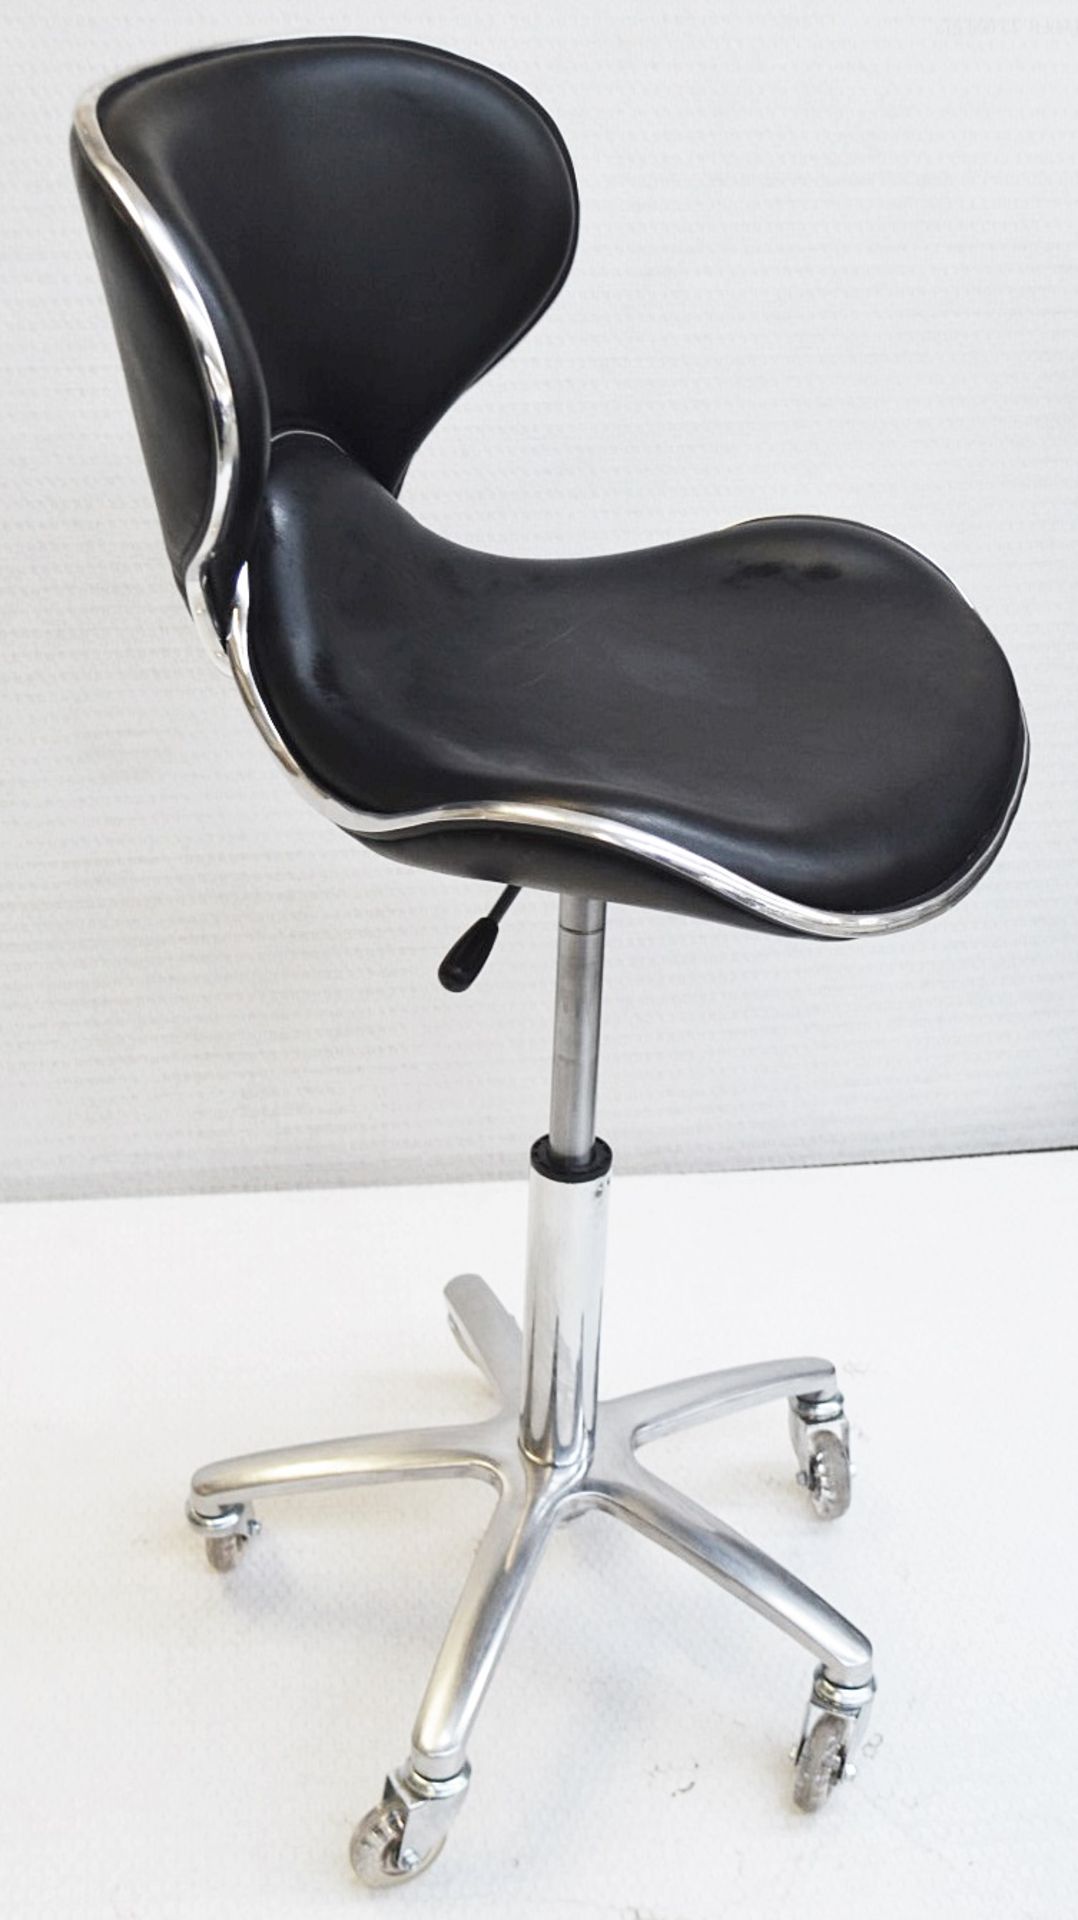 1 x Black Saddle Gas Lift Salon Swivel Chair On Castors - Ref: MHB109(2/3) - CL670 - Location: